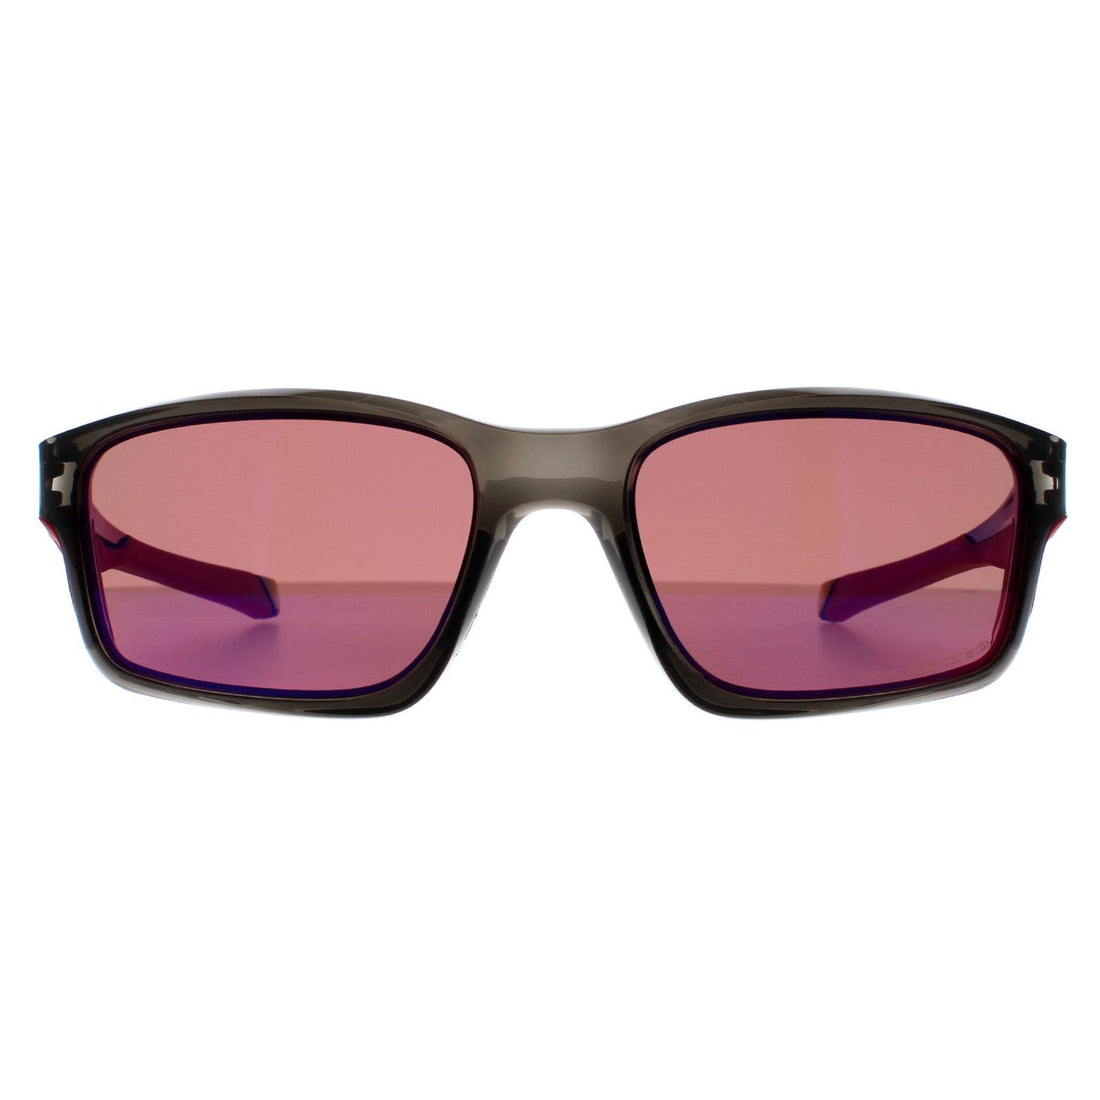 Oakley Chainlink oo9247 Sunglasses Grey Smoke 00 Red Iridium Polarized